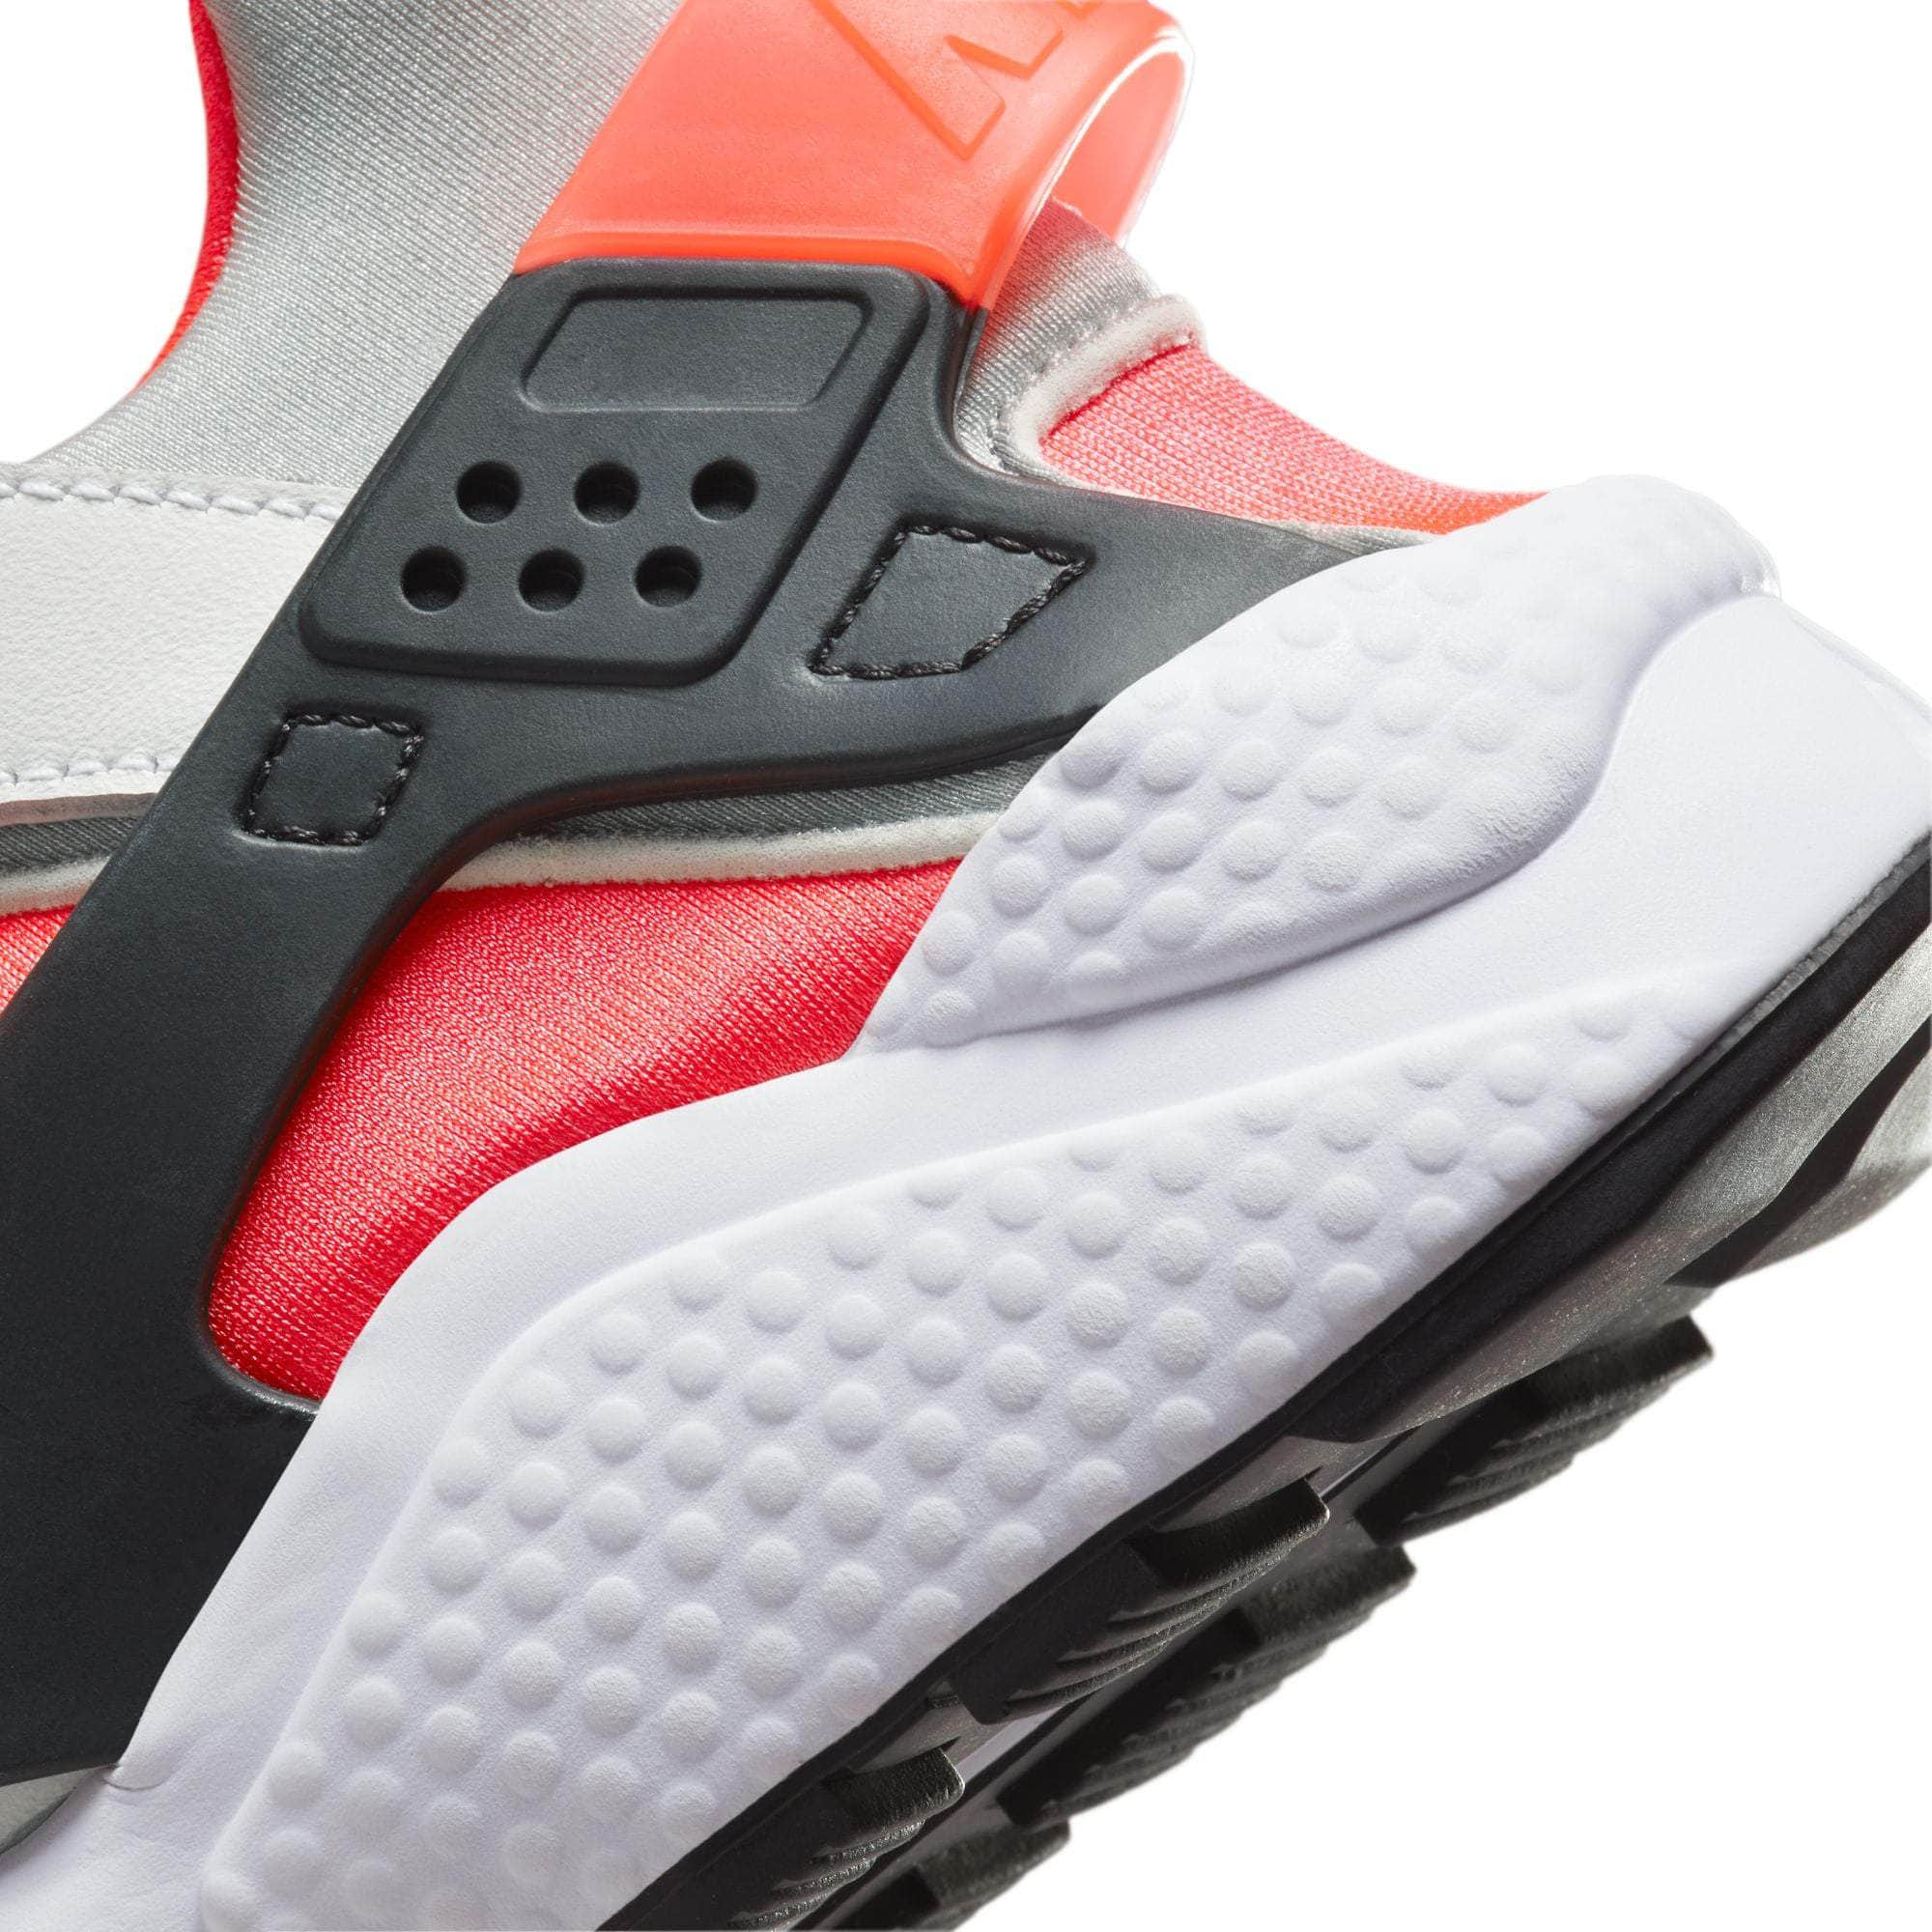 NIKE FOOTWEAR Nike Air Huarache “Icons” - Men's